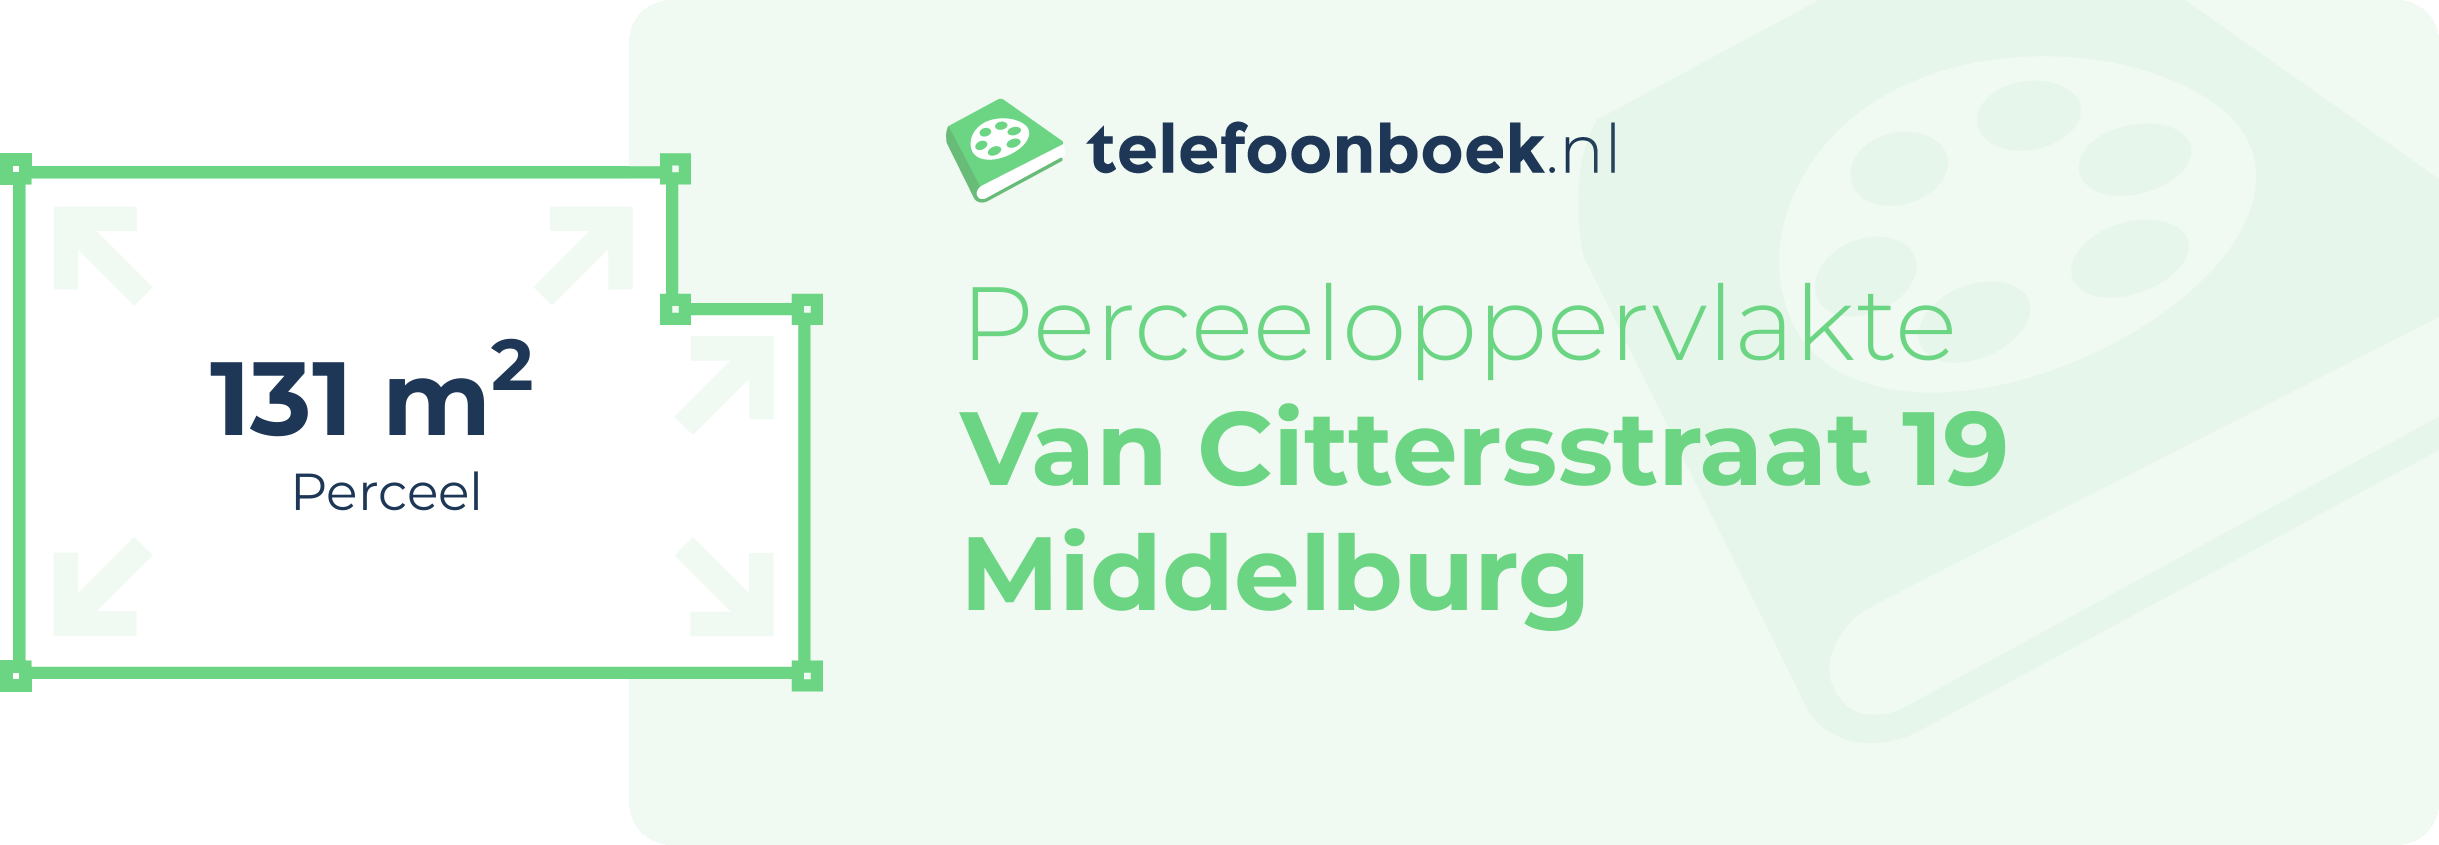 Perceeloppervlakte Van Cittersstraat 19 Middelburg